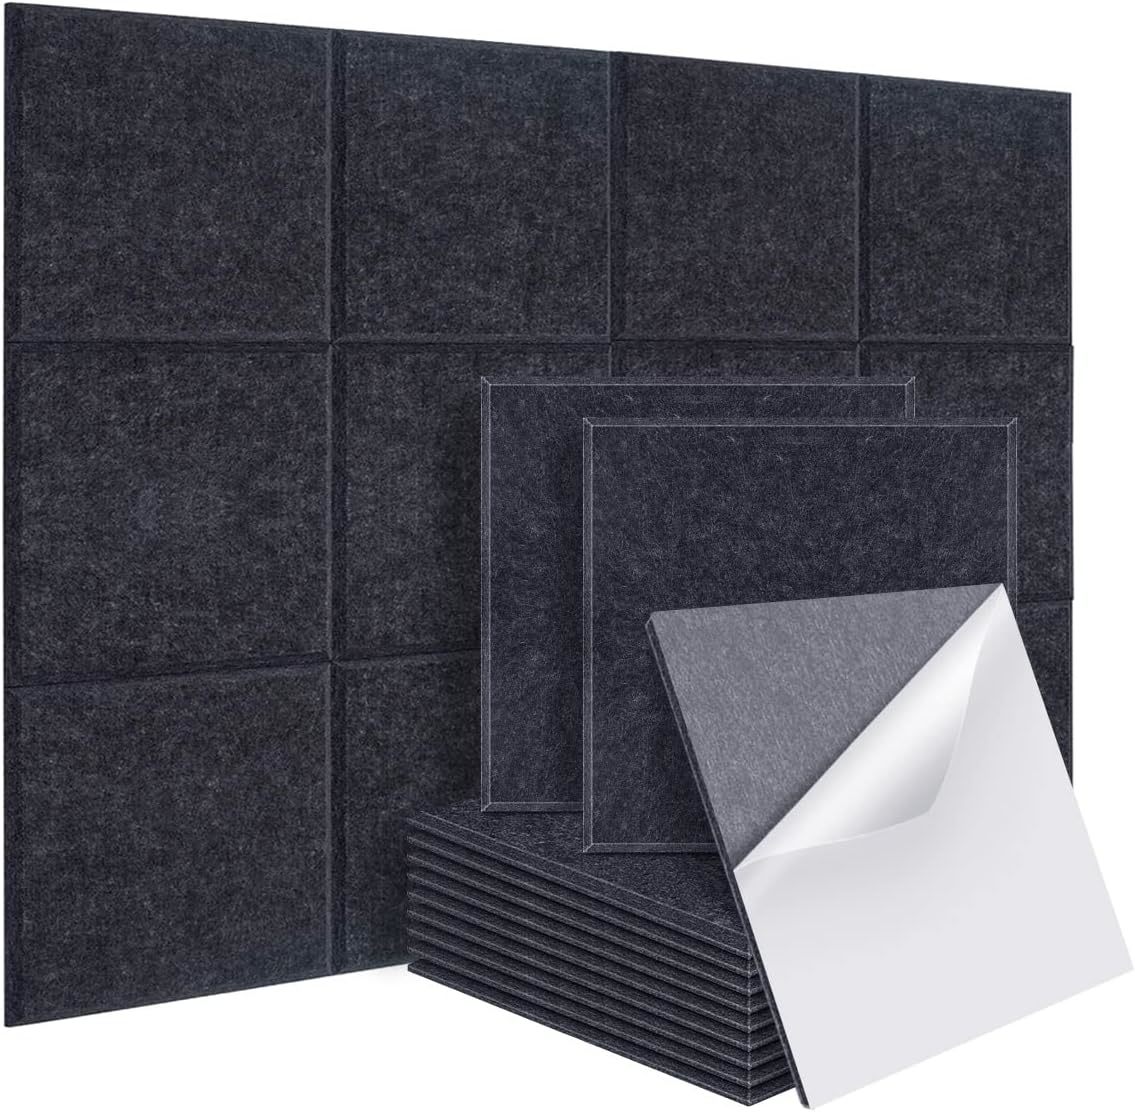 JARDEON Sound Proof padding Large 16'' X 16'' X 0.4'' Acoustic Panels